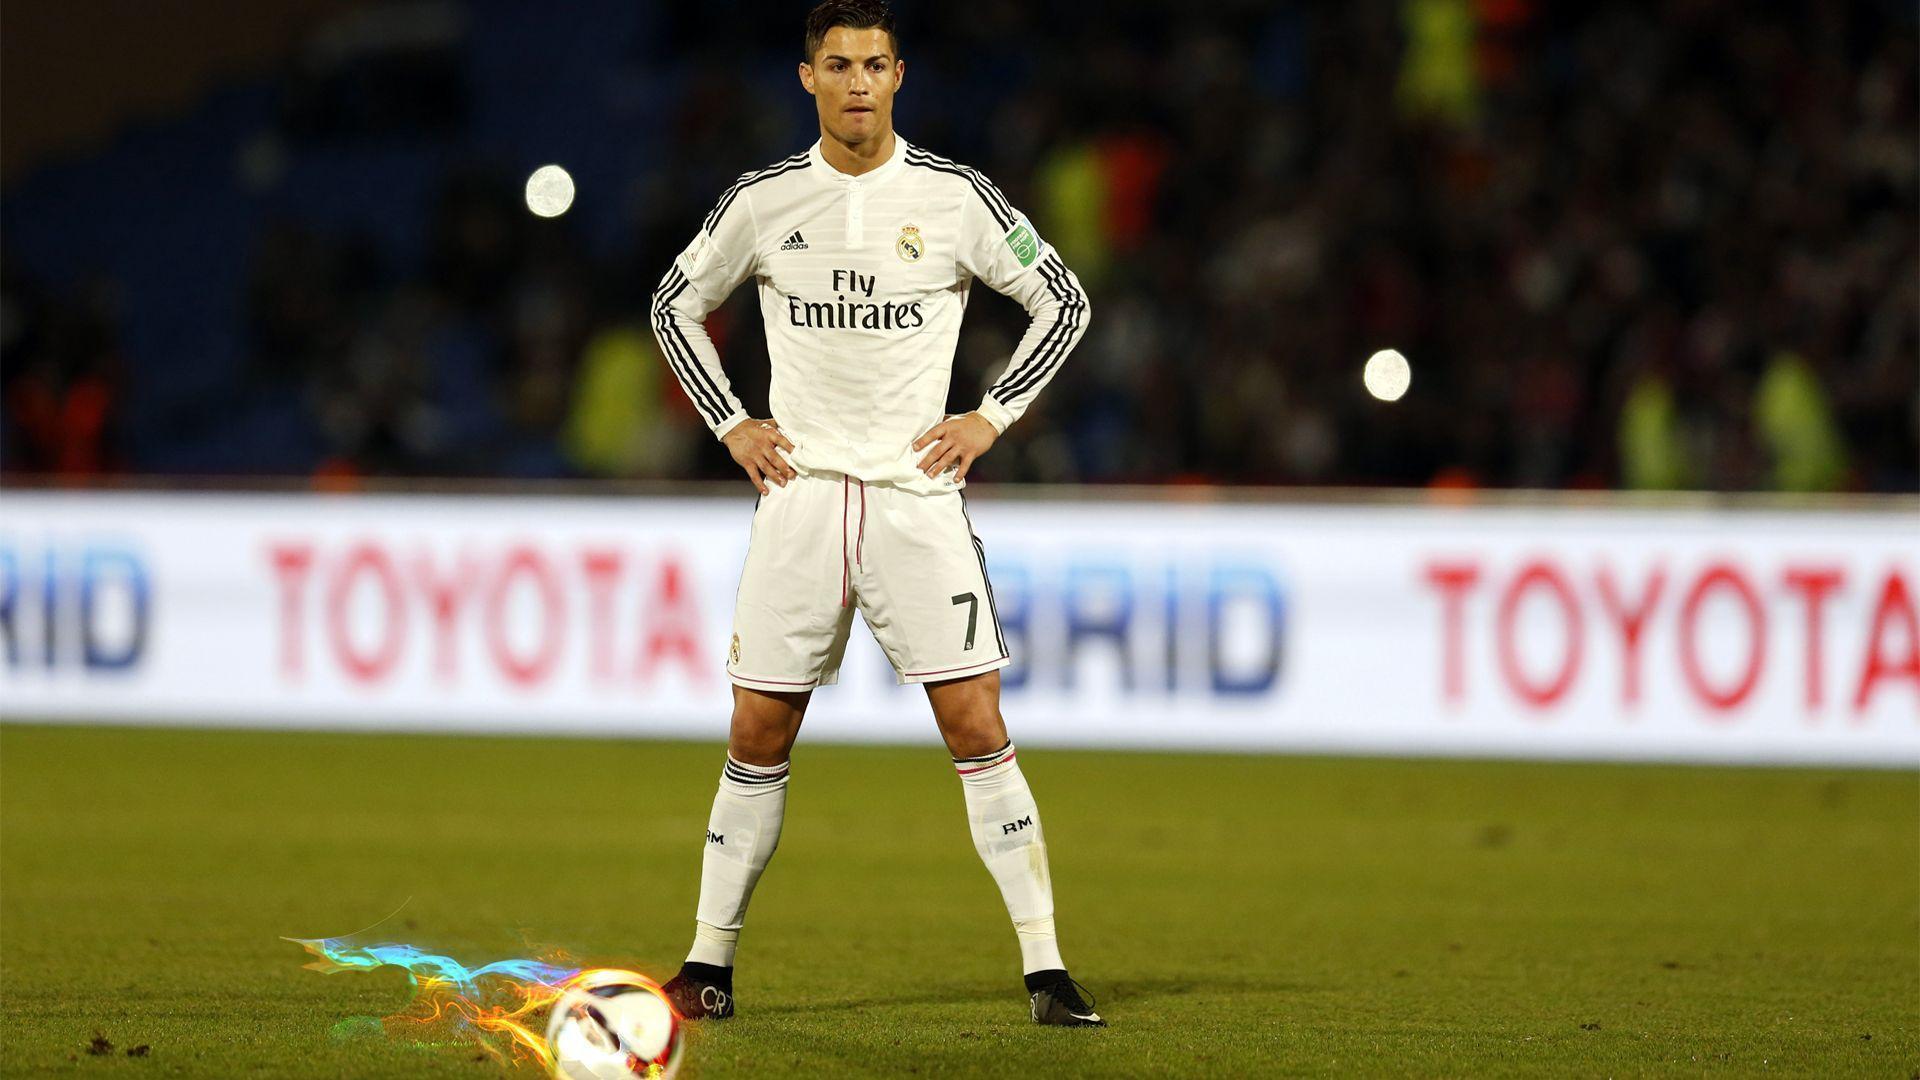 Wallpaper HD Cristiano Ronaldo Fire Football Players On 2017 Image